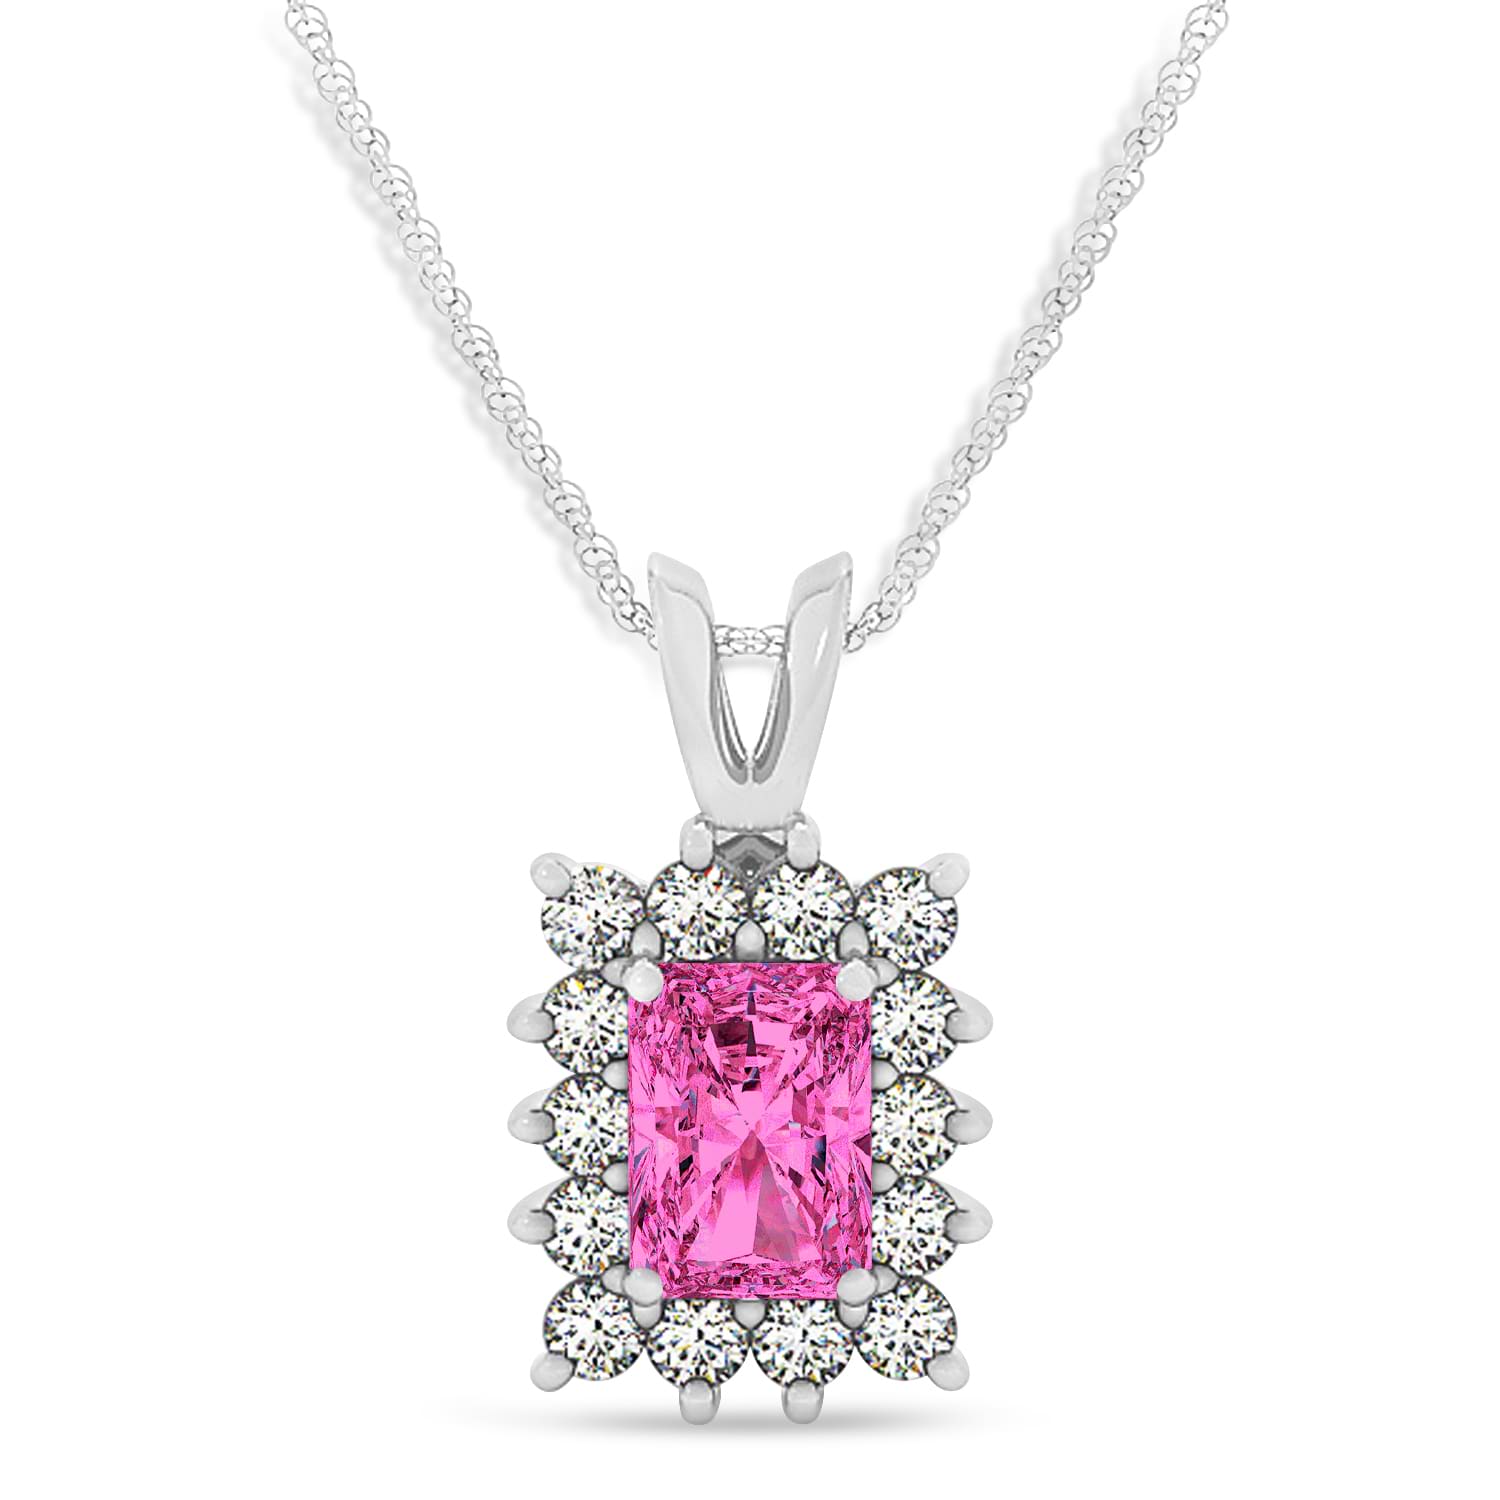 Emerald Shape Pink Topaz & Diamond Pendant Necklace 14k White Gold (3.90ct)